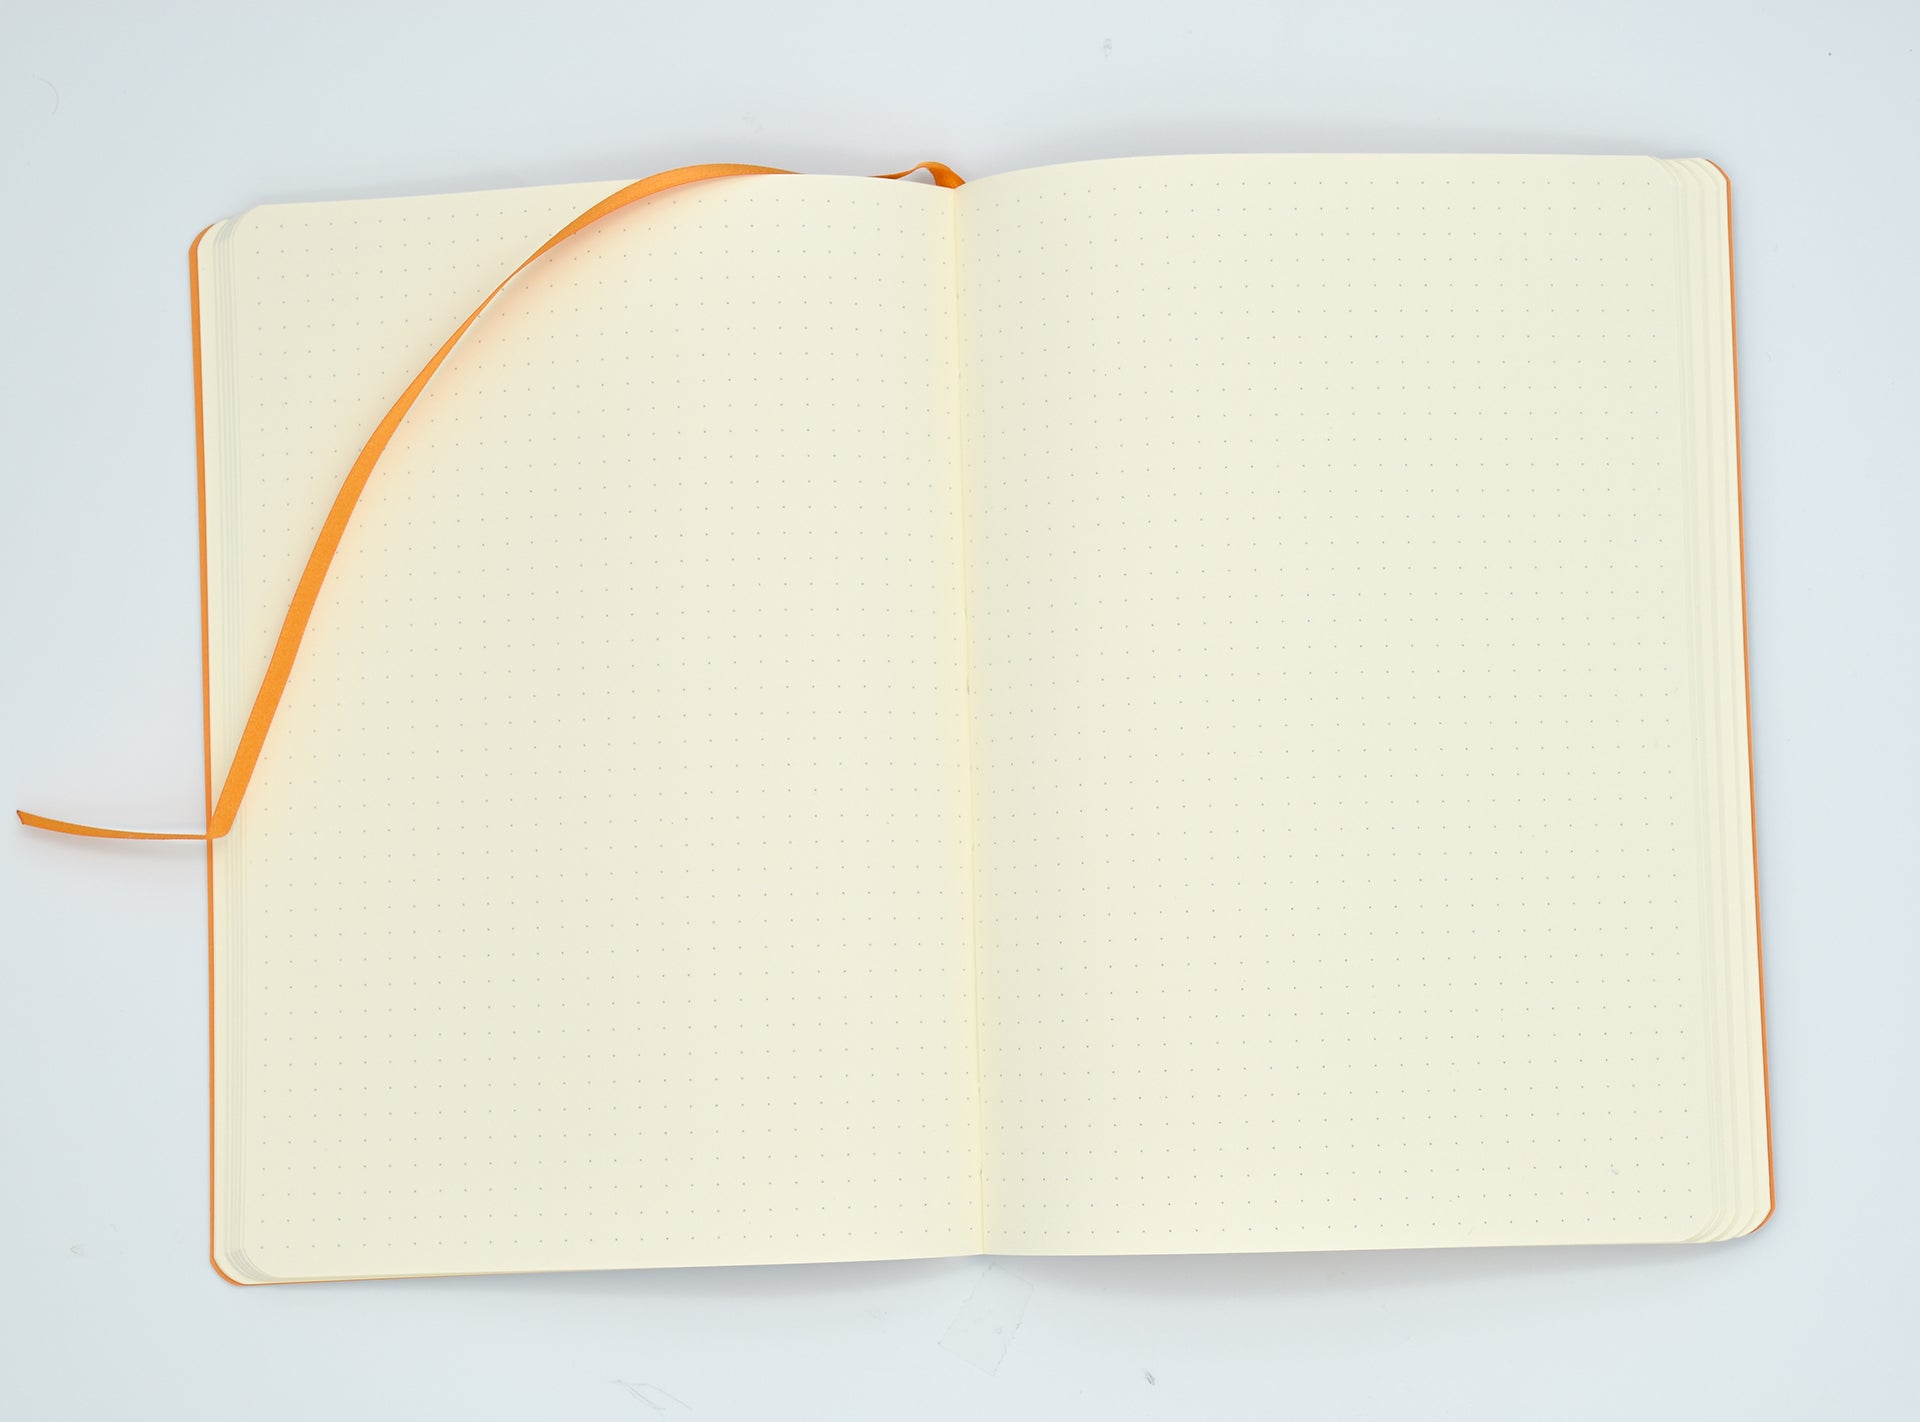 Rhodiarama Dot Grid Notebook / Turquoise